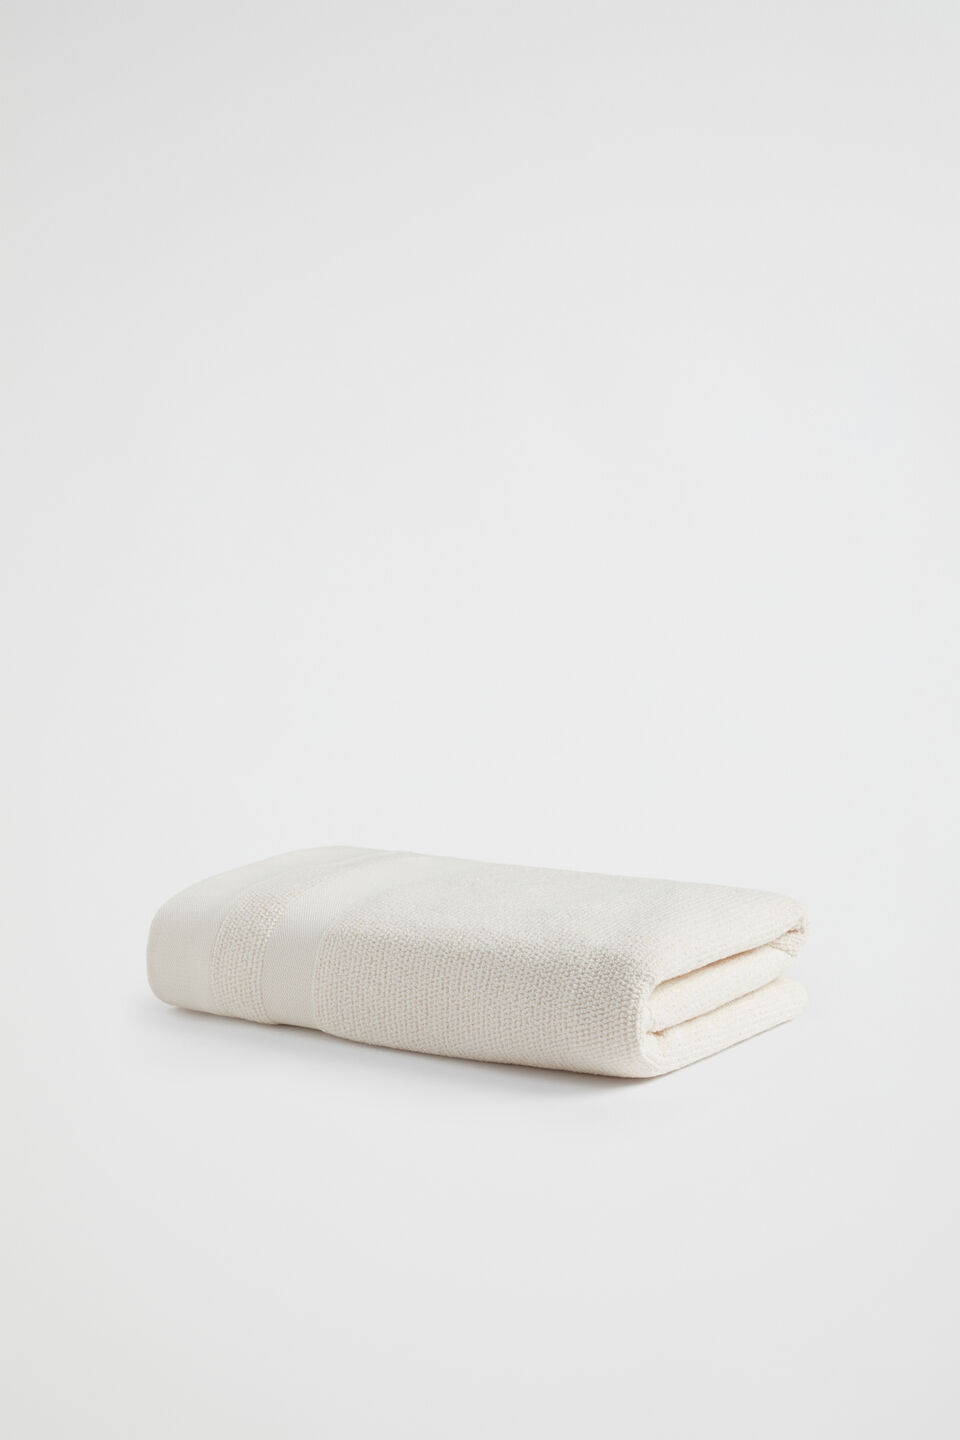 Luca Cotton Towel  Almond